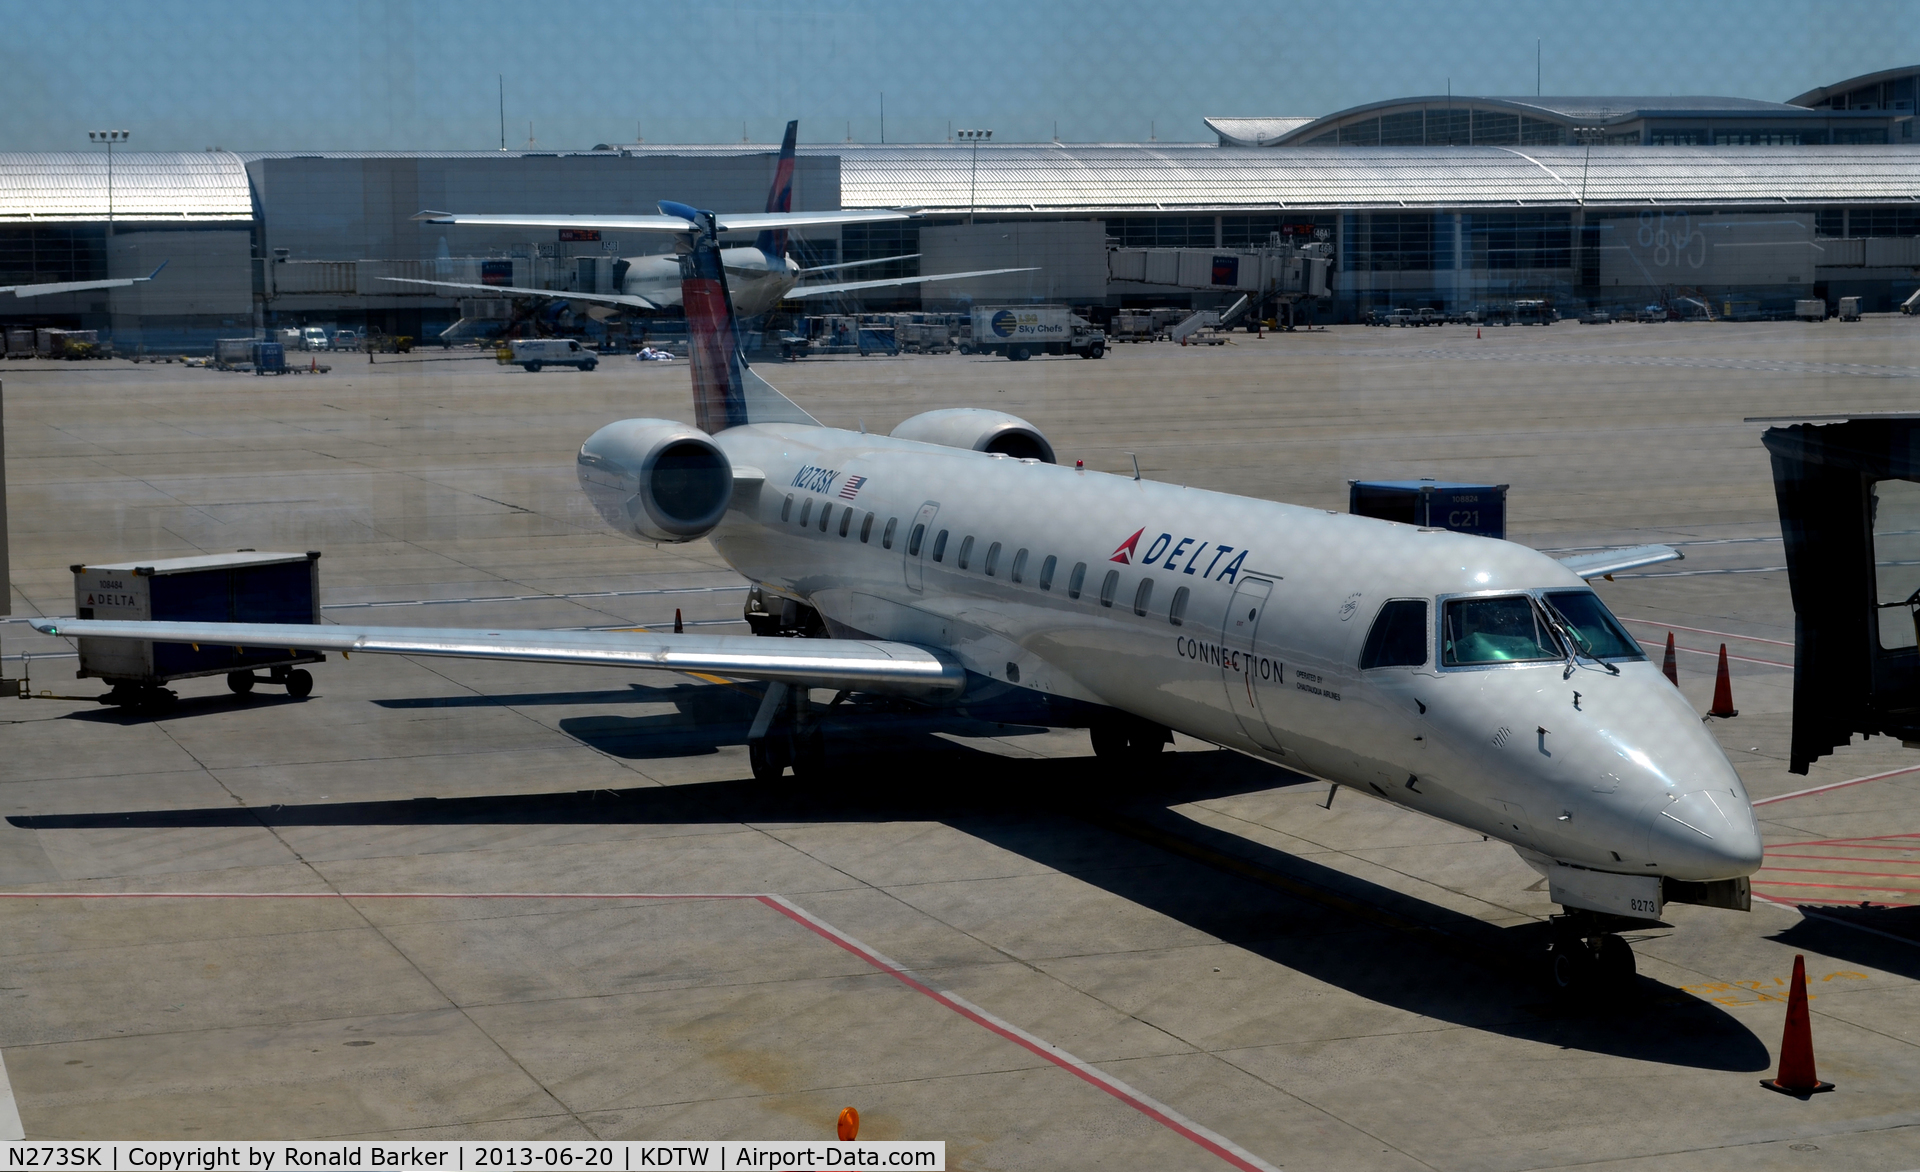 N273SK, 2000 Embraer EMB-145LR C/N 145331, Gate C21 DTW